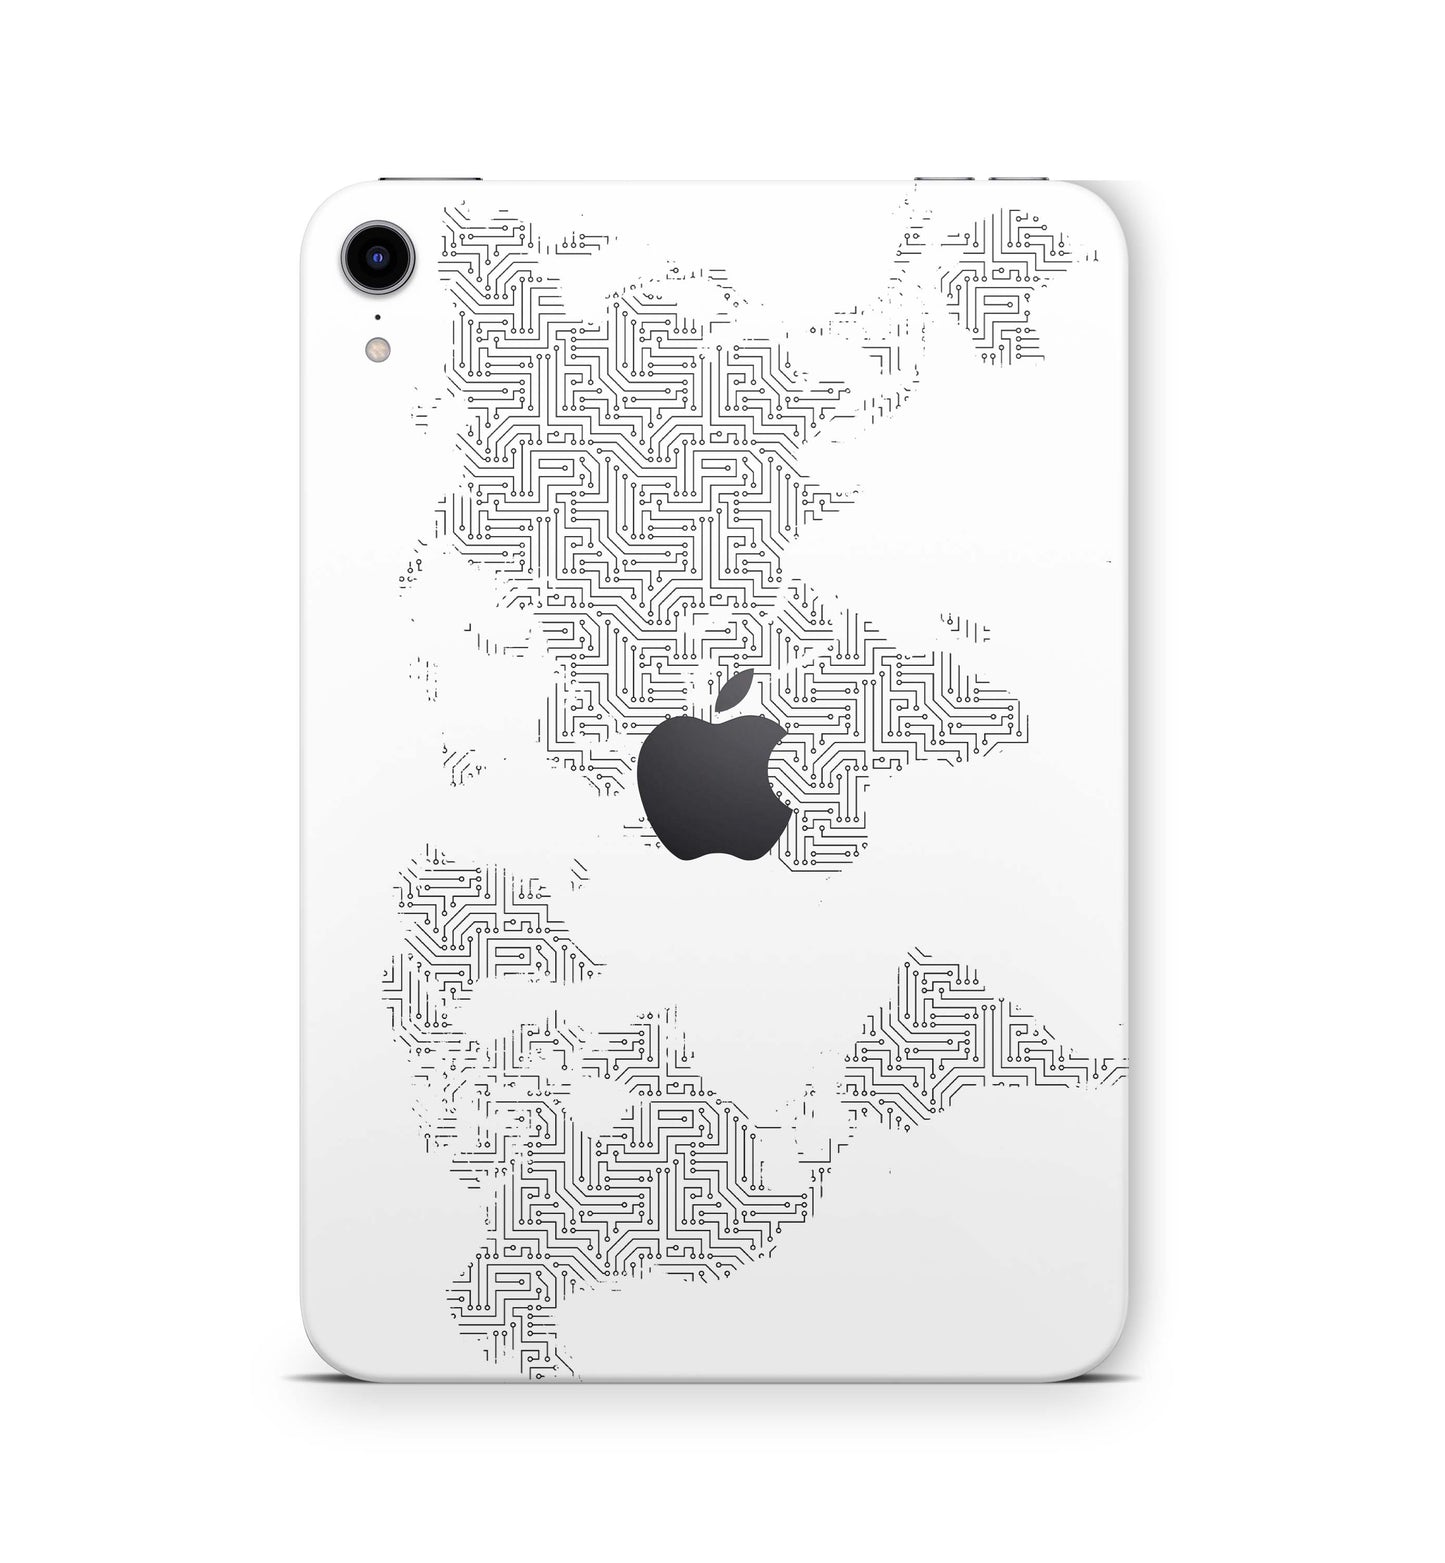 iPad Mini Skin Design Cover Folie Vinyl Skins & Wraps für alle iPad Mini Modelle Aufkleber Skins4u Weltkarte  